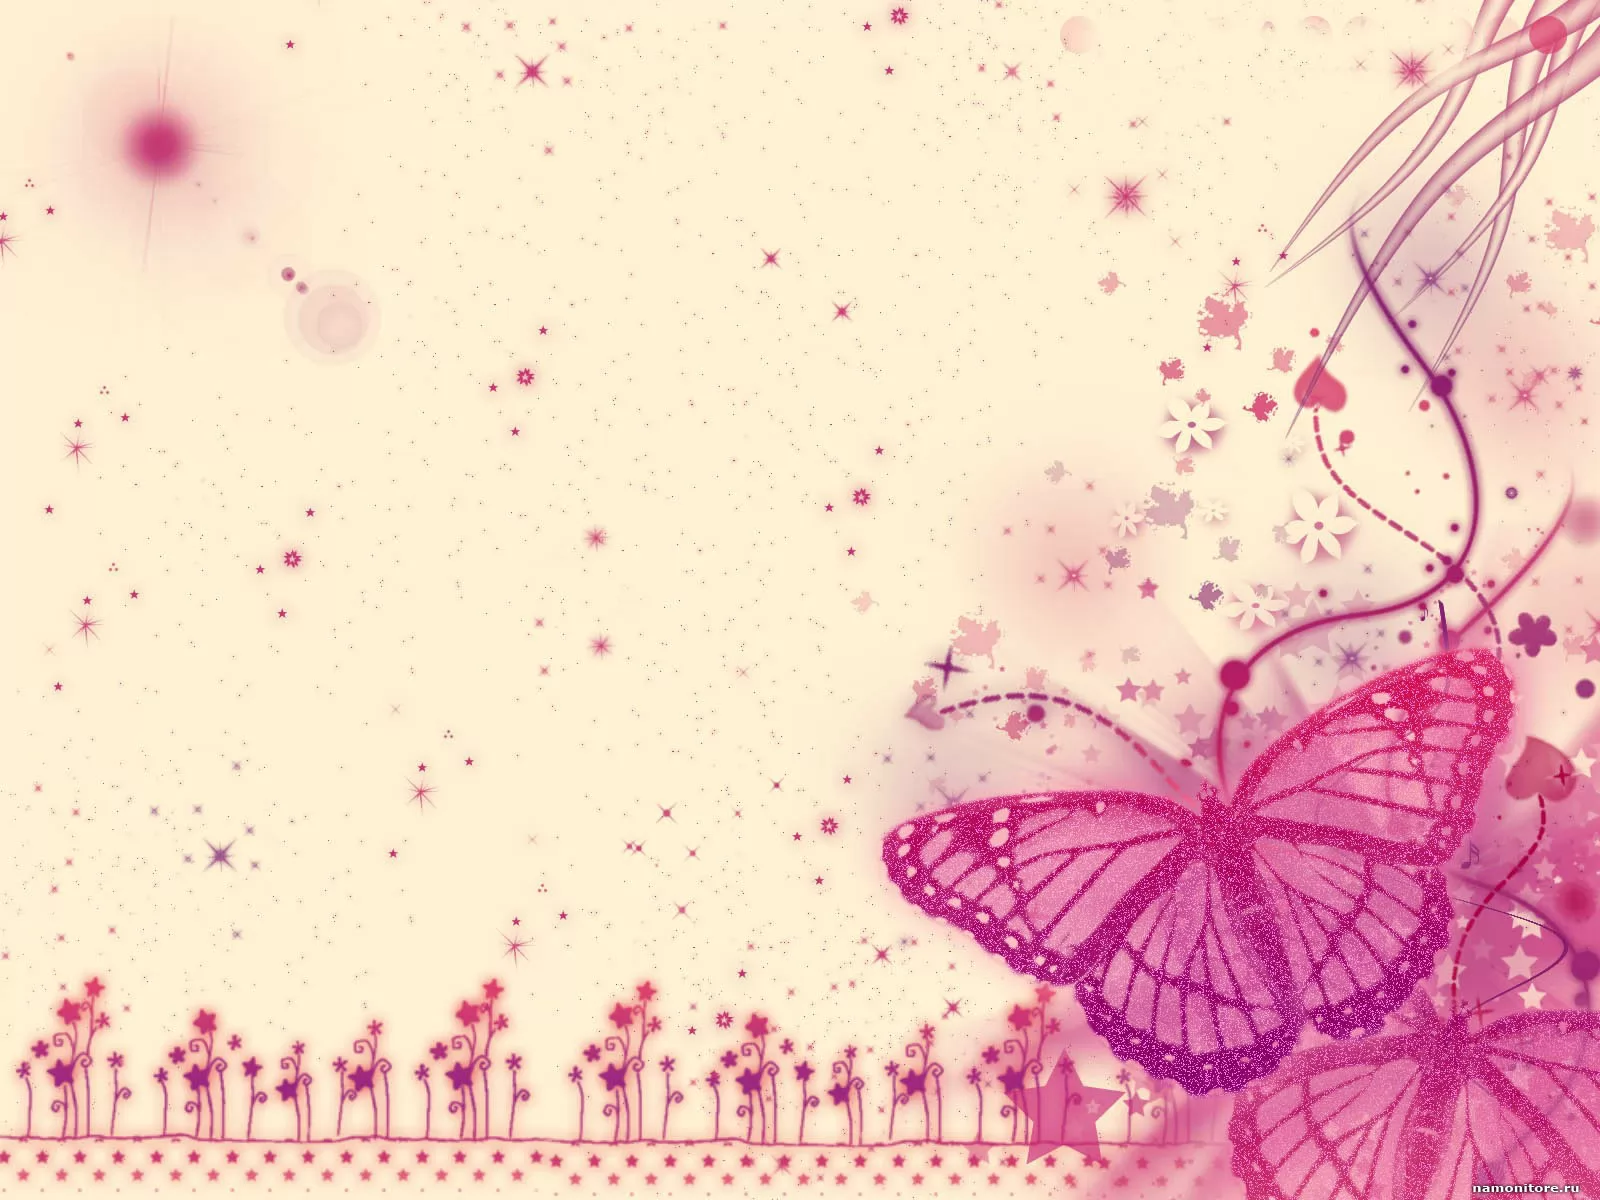 Бабочки розовые фон. Фон бабочки. Фон для девочки. Красивый фон для обложки. Красивый фон для открытки.